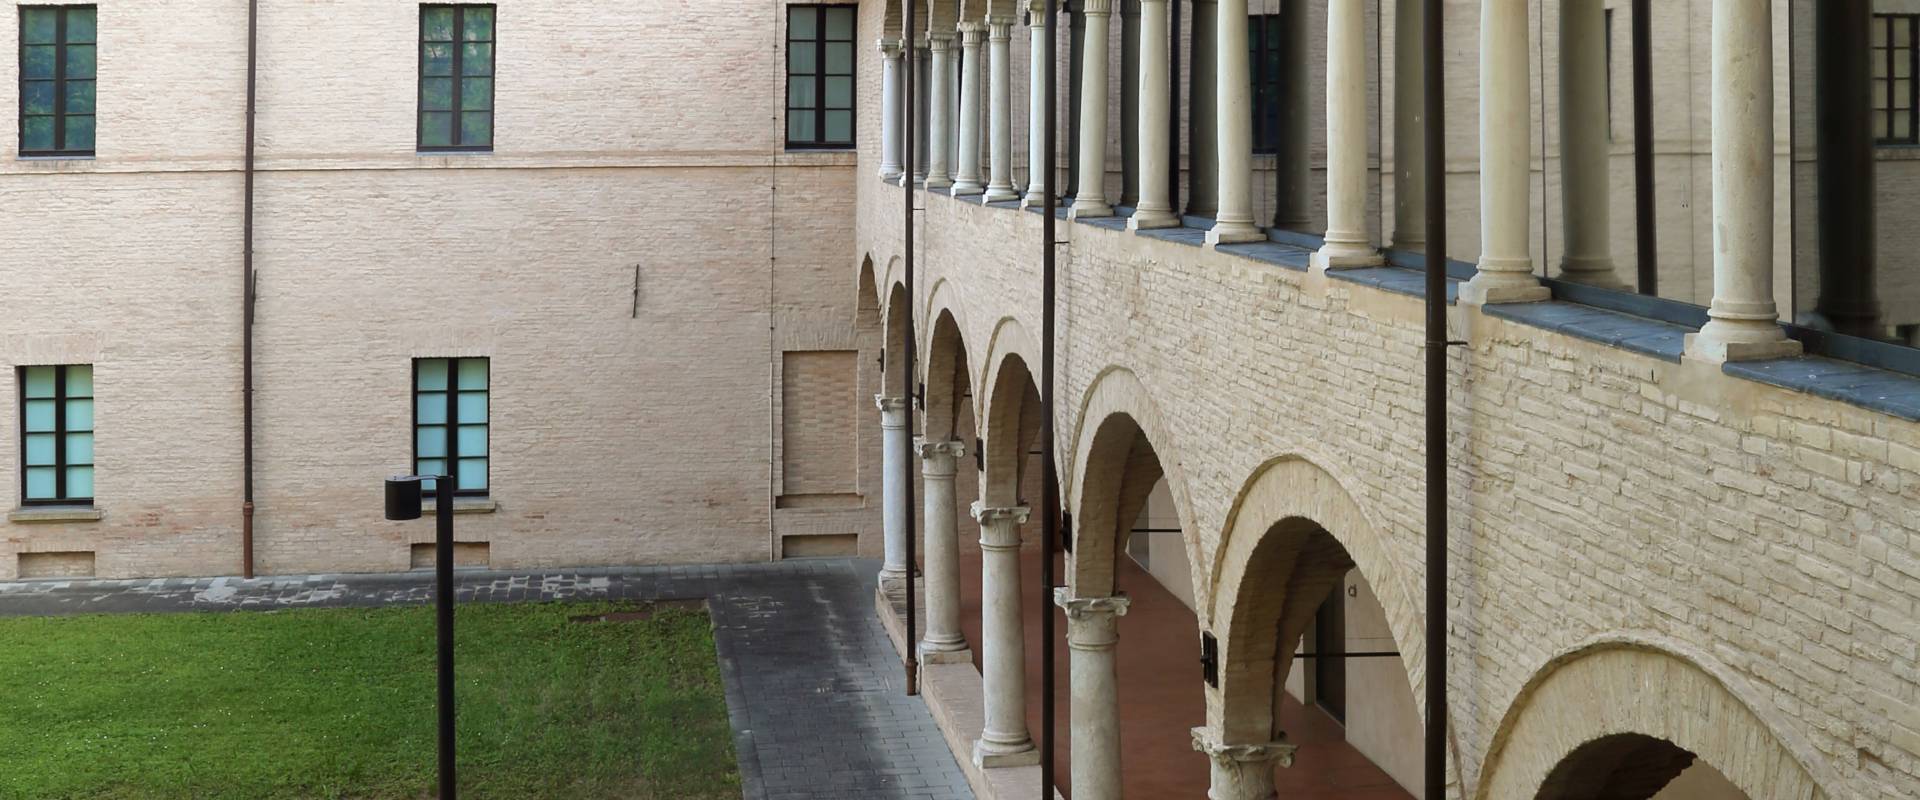 Forlì, museo di san domenico, chiostri 01 photo by Sailko